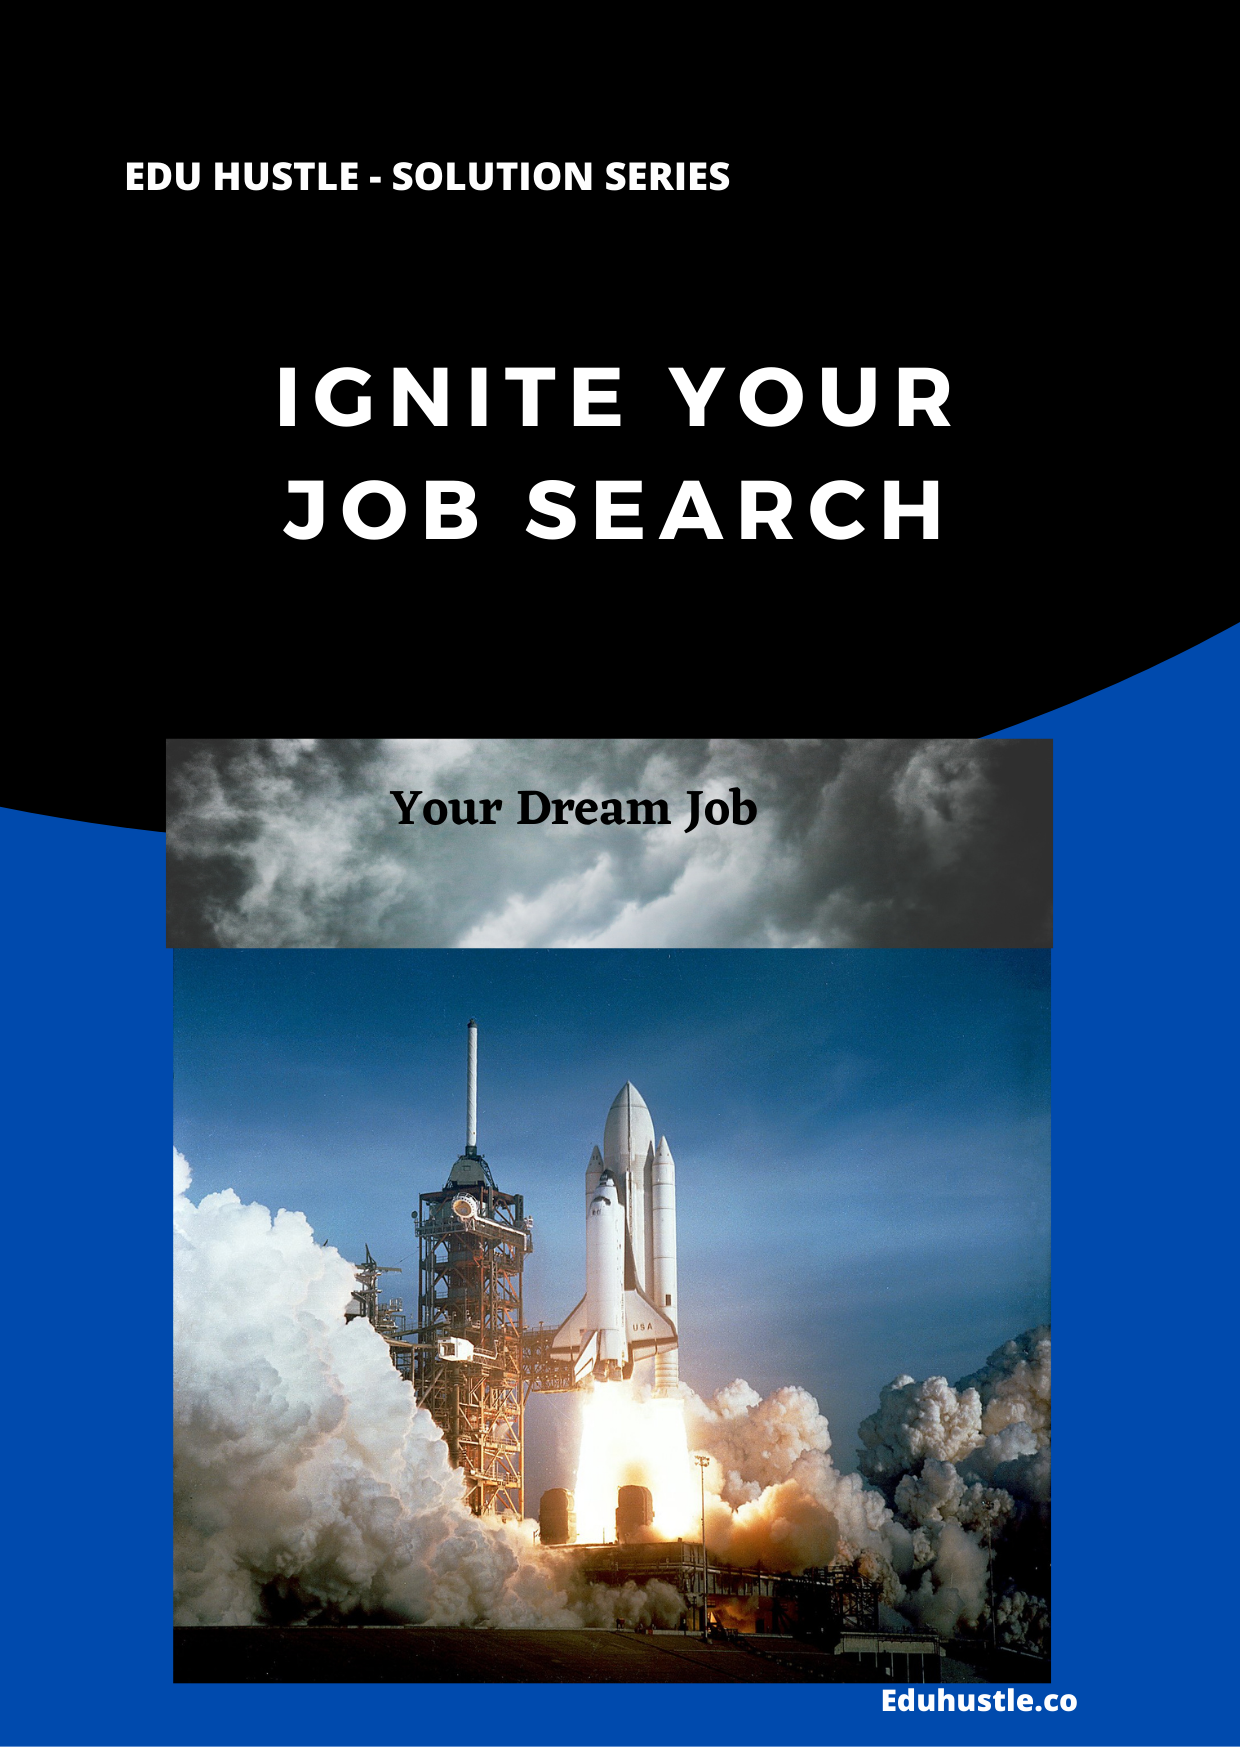 Ignite Your Job Search (Webinar) - EDU HUSTLE